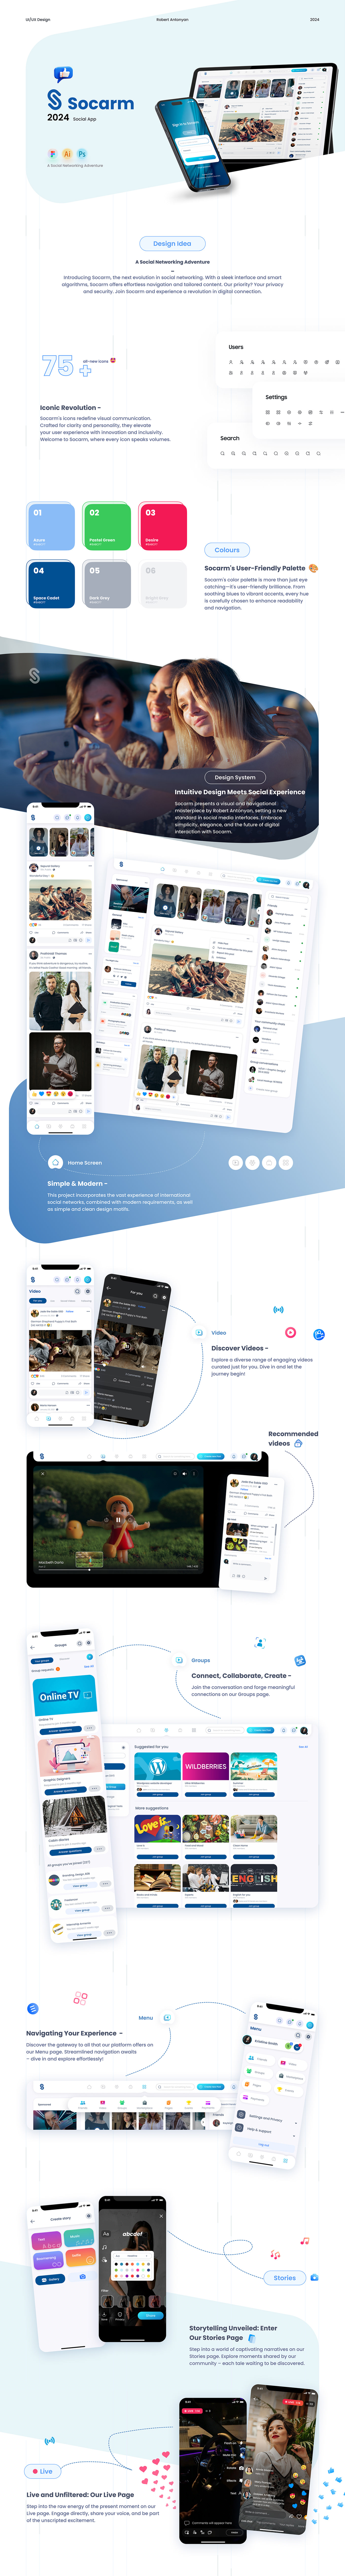 Socialmedia social network app design messenger ui ux design Website social facebook twitter